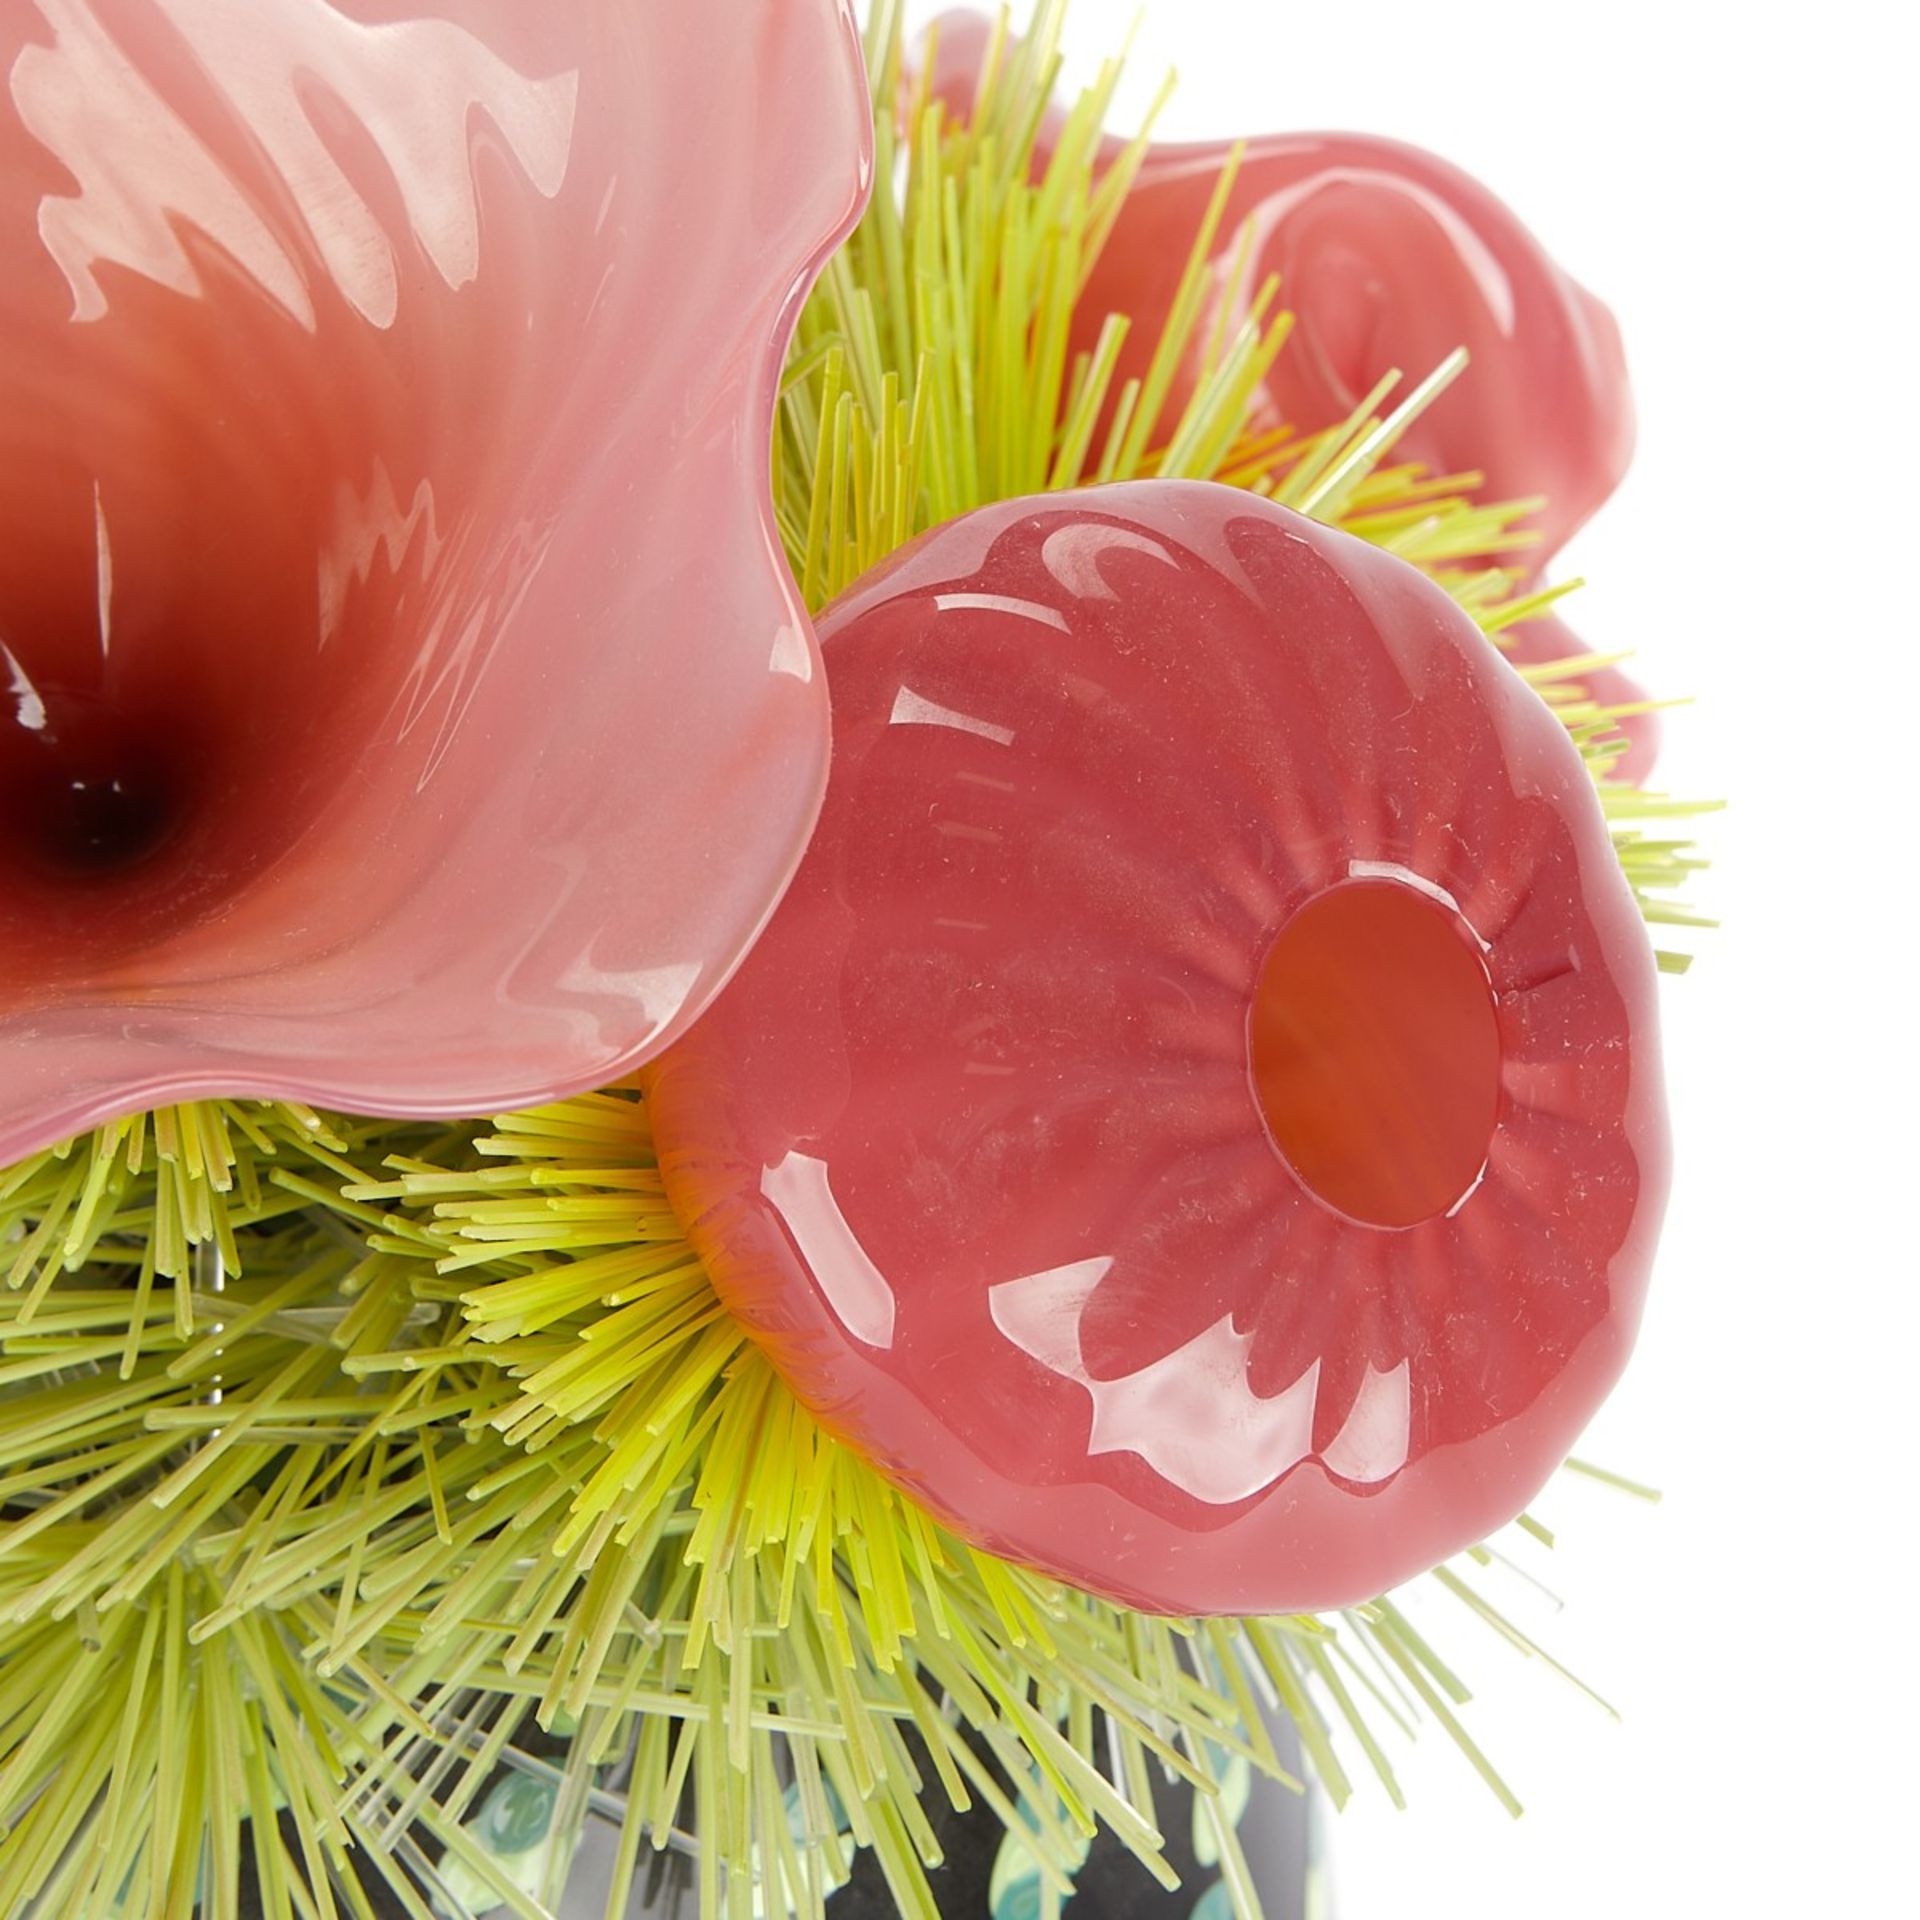 Flo Perkins "Chicago's Cactus" Glass Sculpture - Image 2 of 11